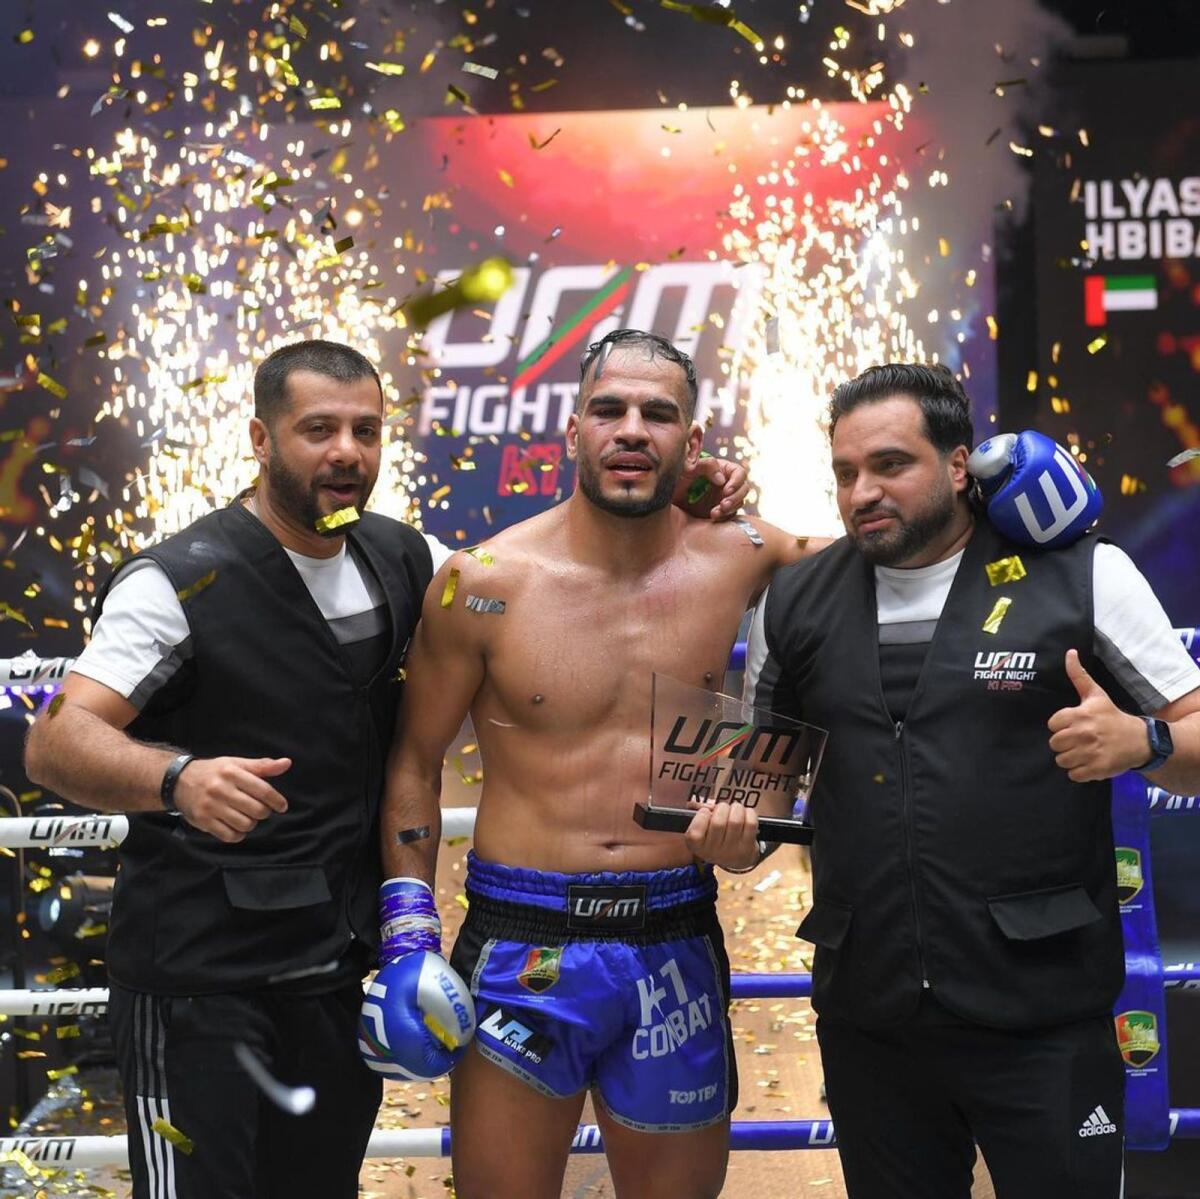 UAE champion Ilyas Habibali (centre) after the bout. — Instagram